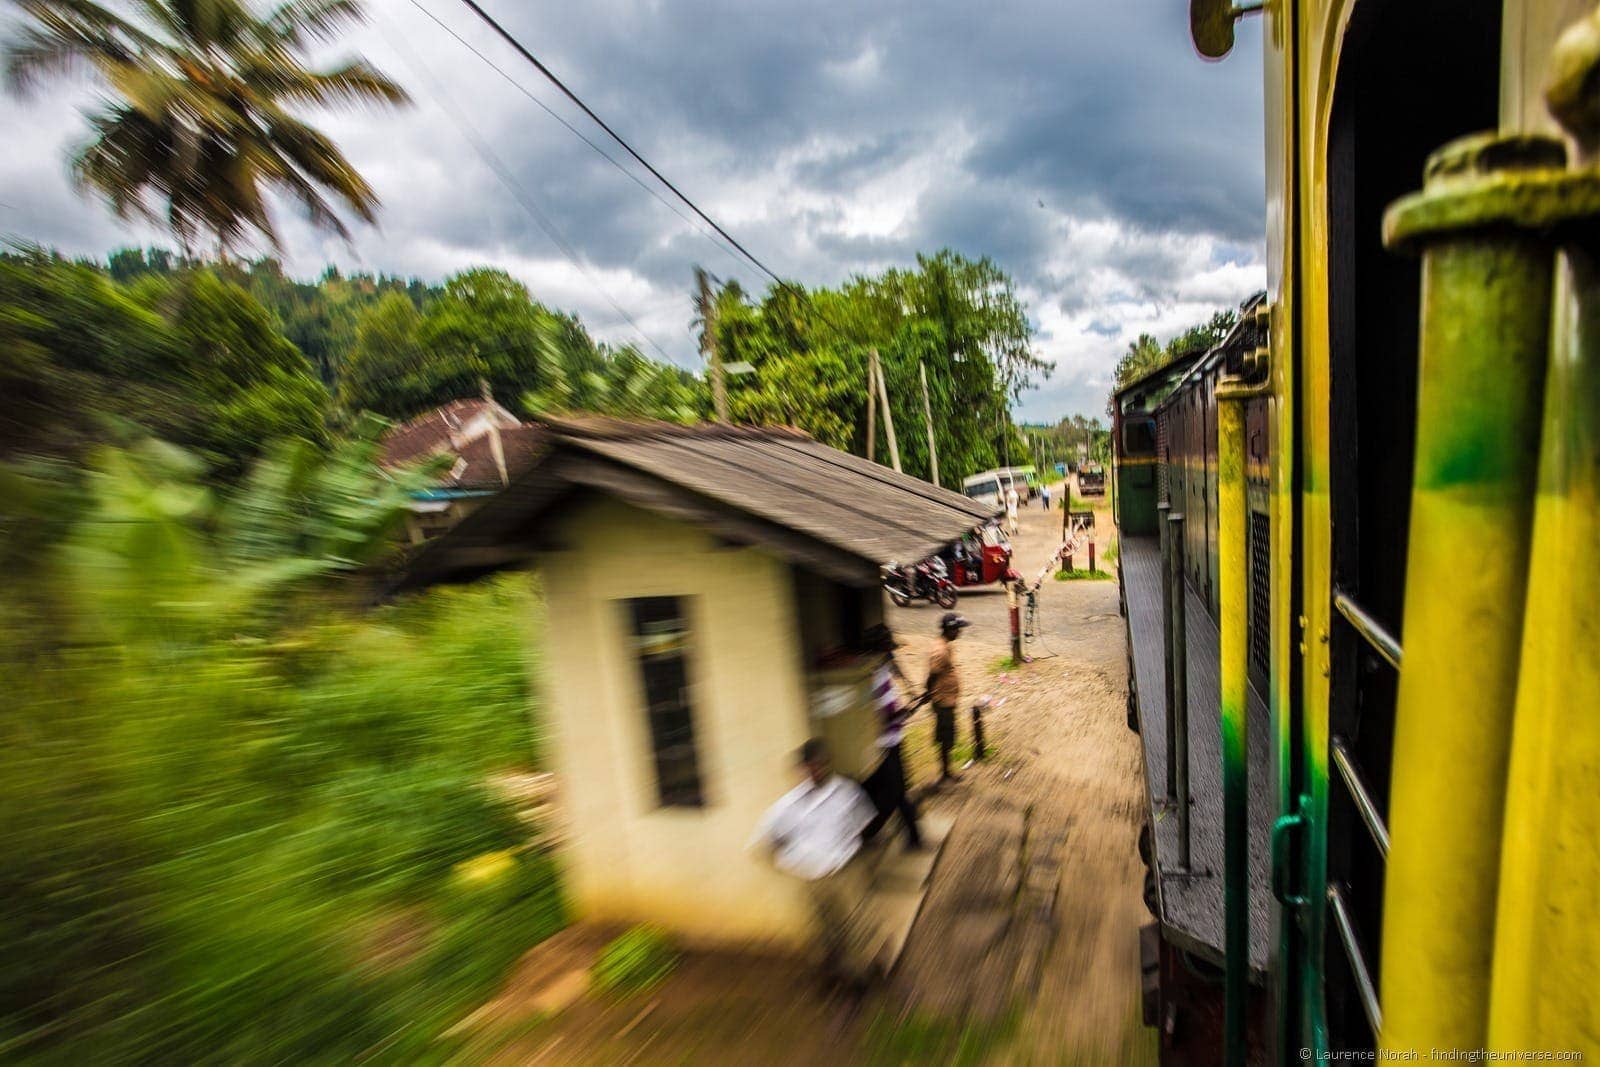 Train in motion Sri Lanka 1